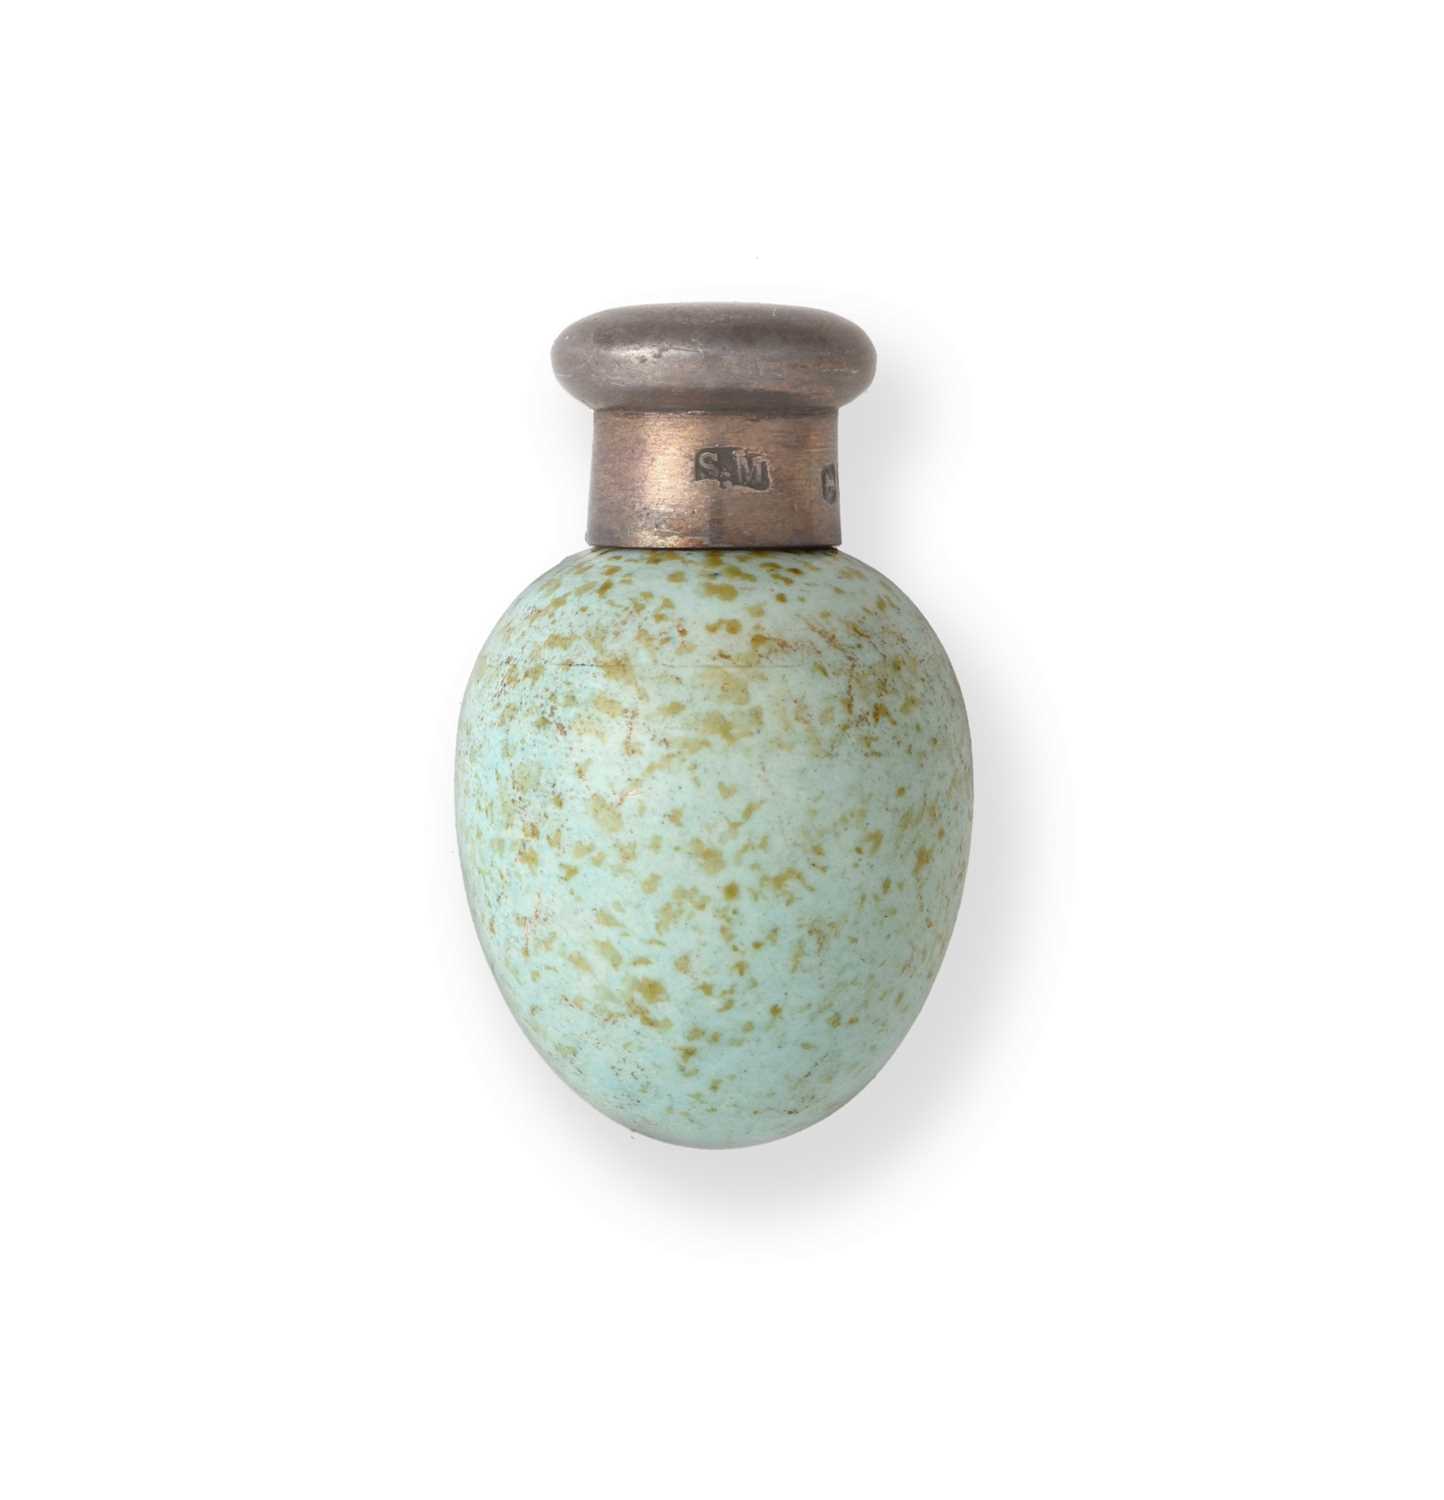 Lot 2054 - A Victorian Silver-Mounted Porcelain Scent-Bottle